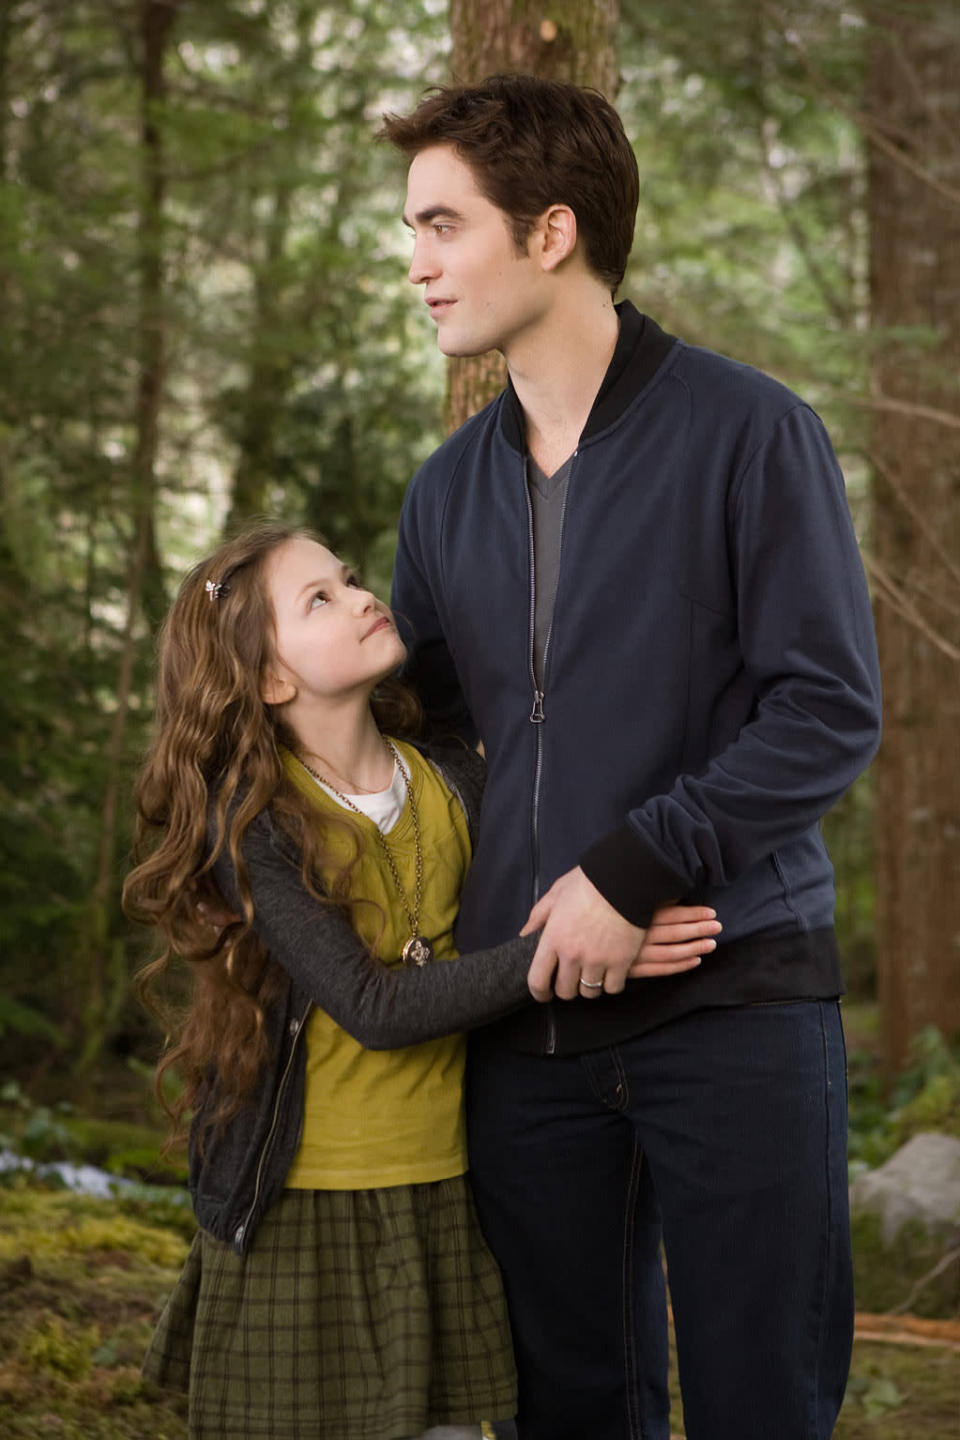 Mackenzie Foy and Robert Pattinson in Summit Entertainment's "The Twilight Saga: Breaking Dawn Part 2" - 2012